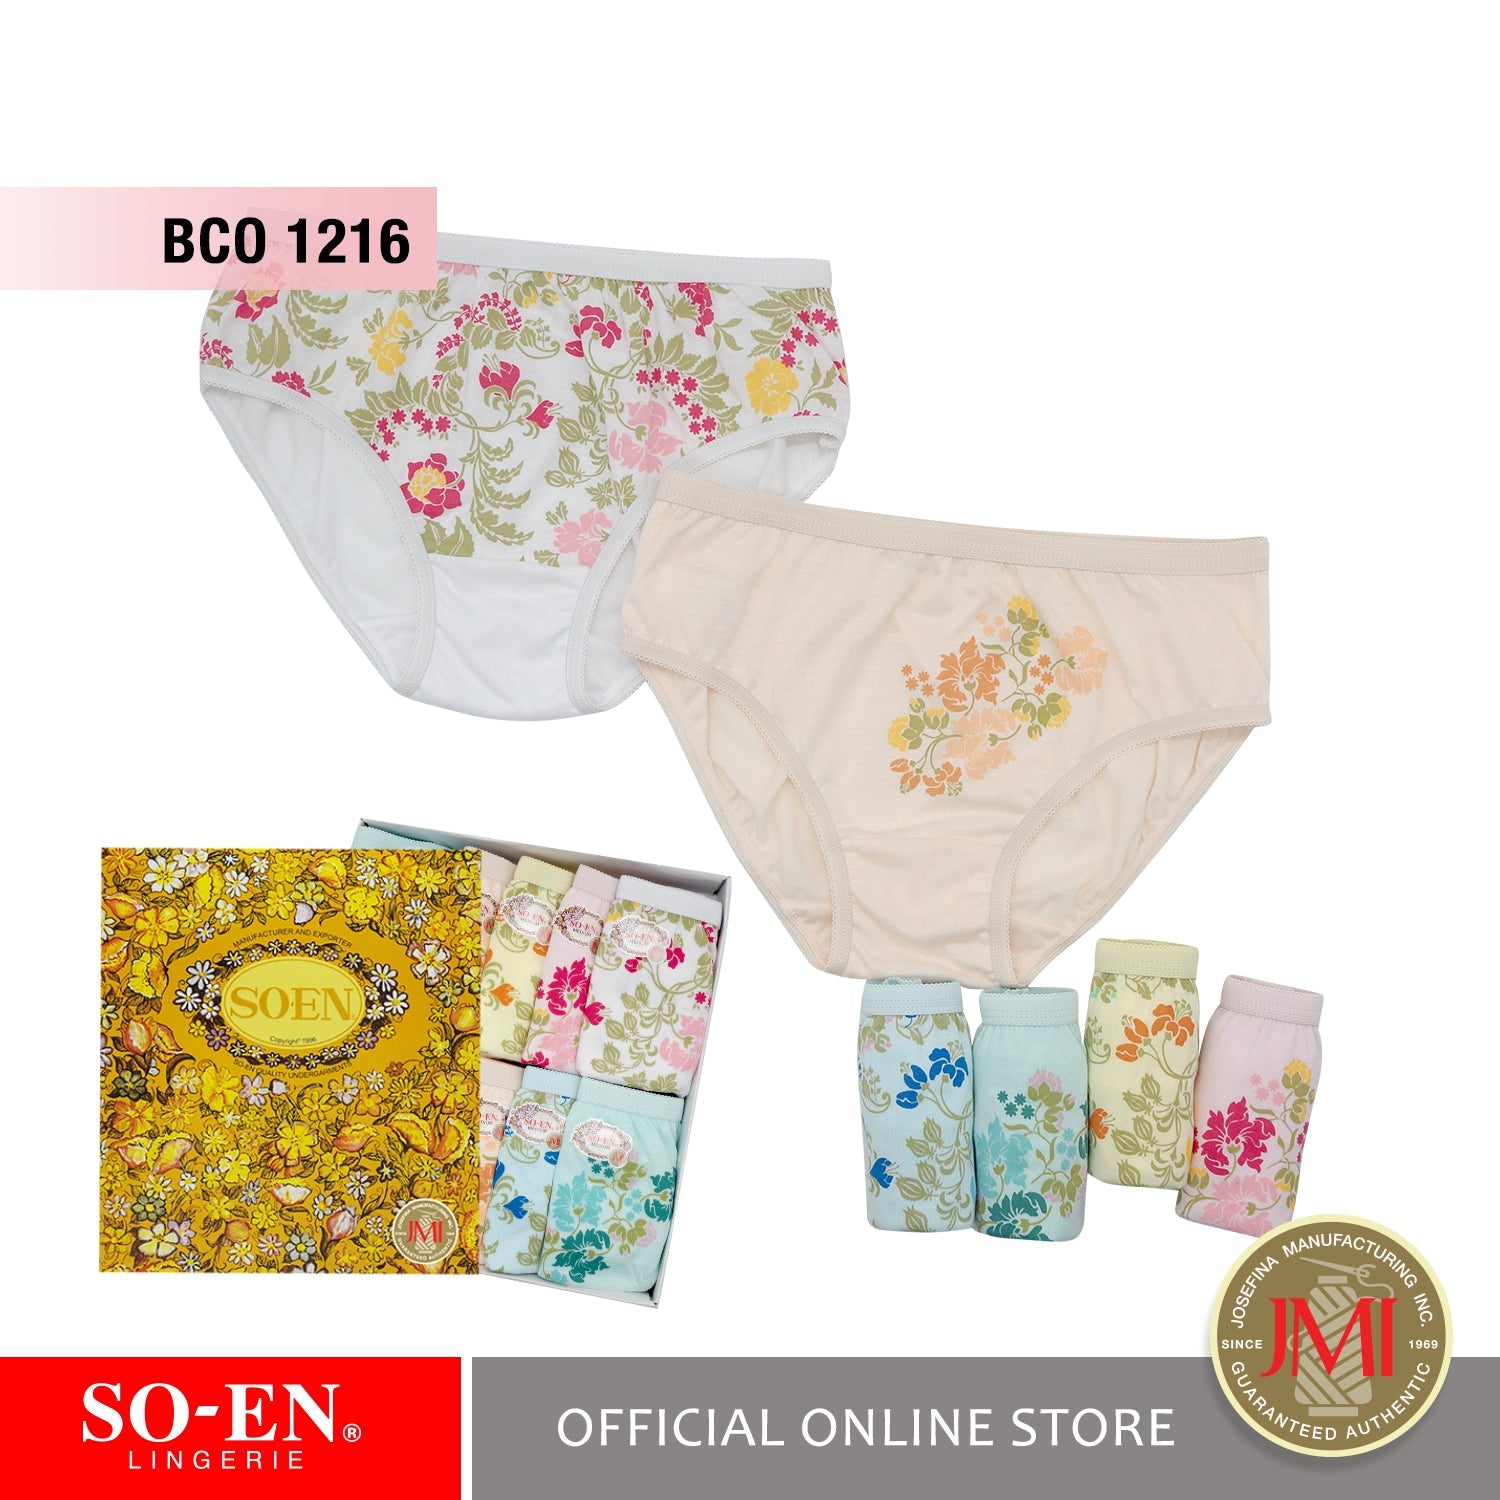 Buy 1 Box of 12 Ladies SOEN Flowers Design Women's Underwear